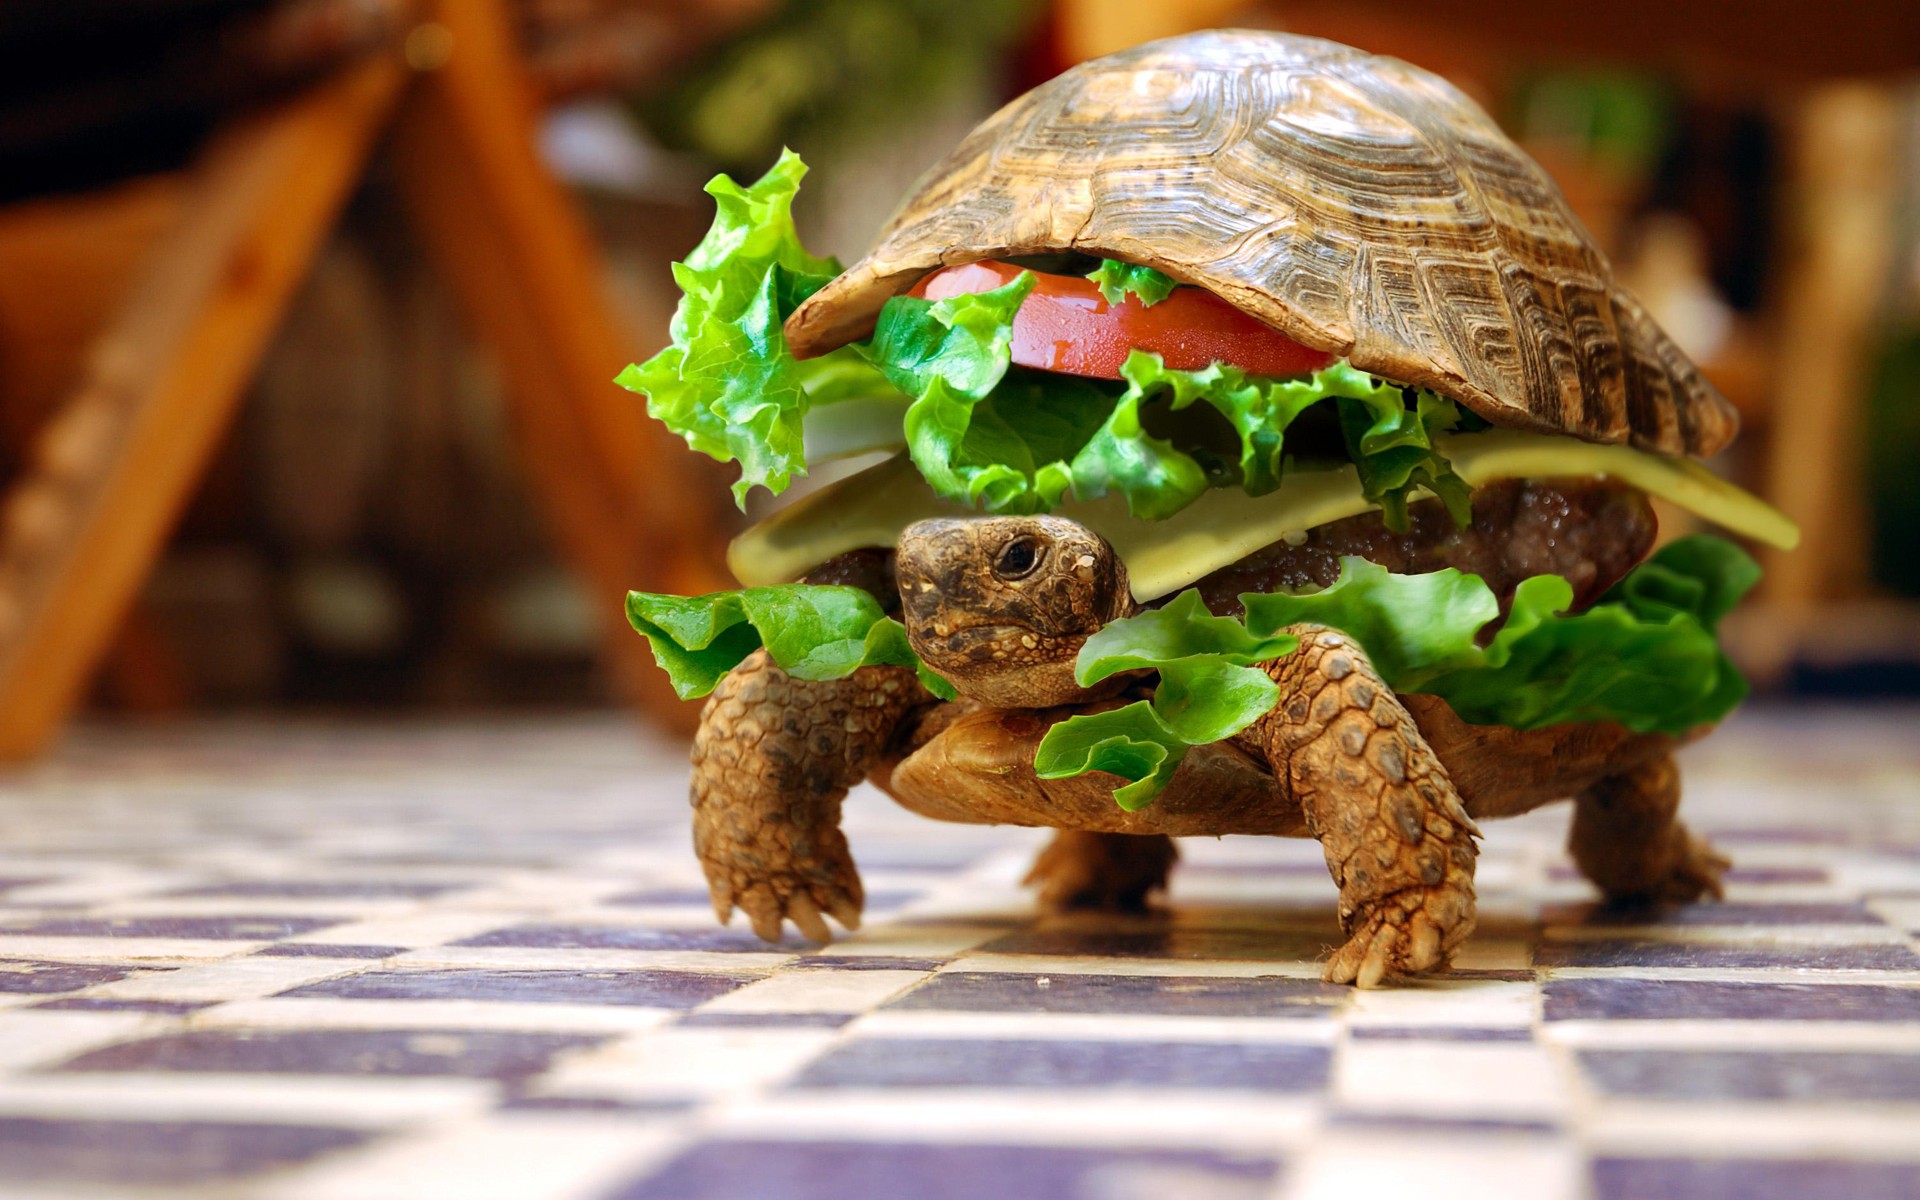 General 1920x1200 humor animals turtle food salad digital art photo manipulation